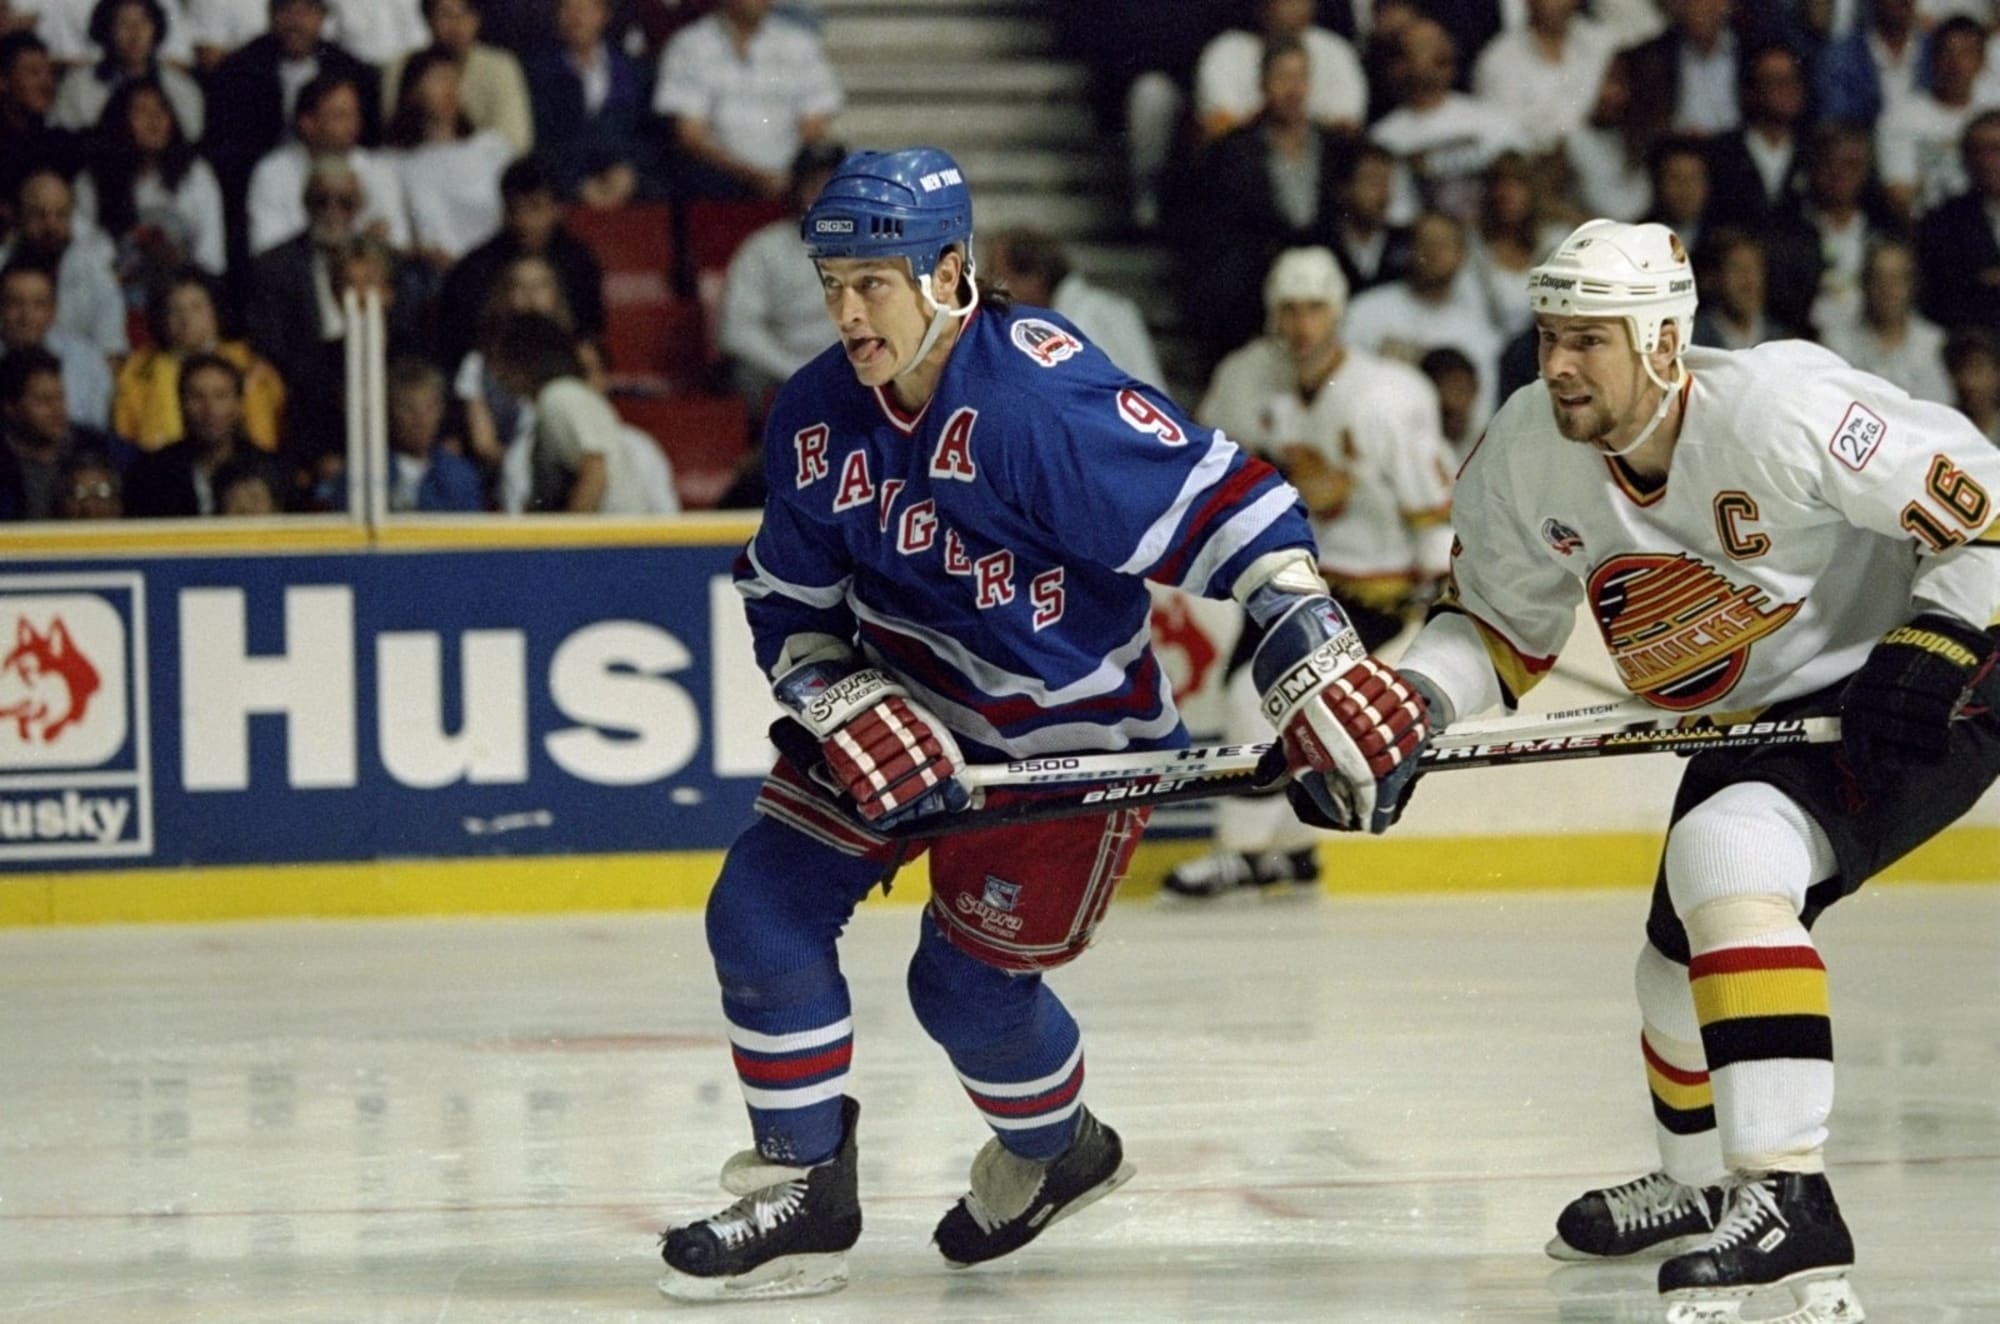 1994 New York Rangers Stanley Cup Team celebrates 25 years